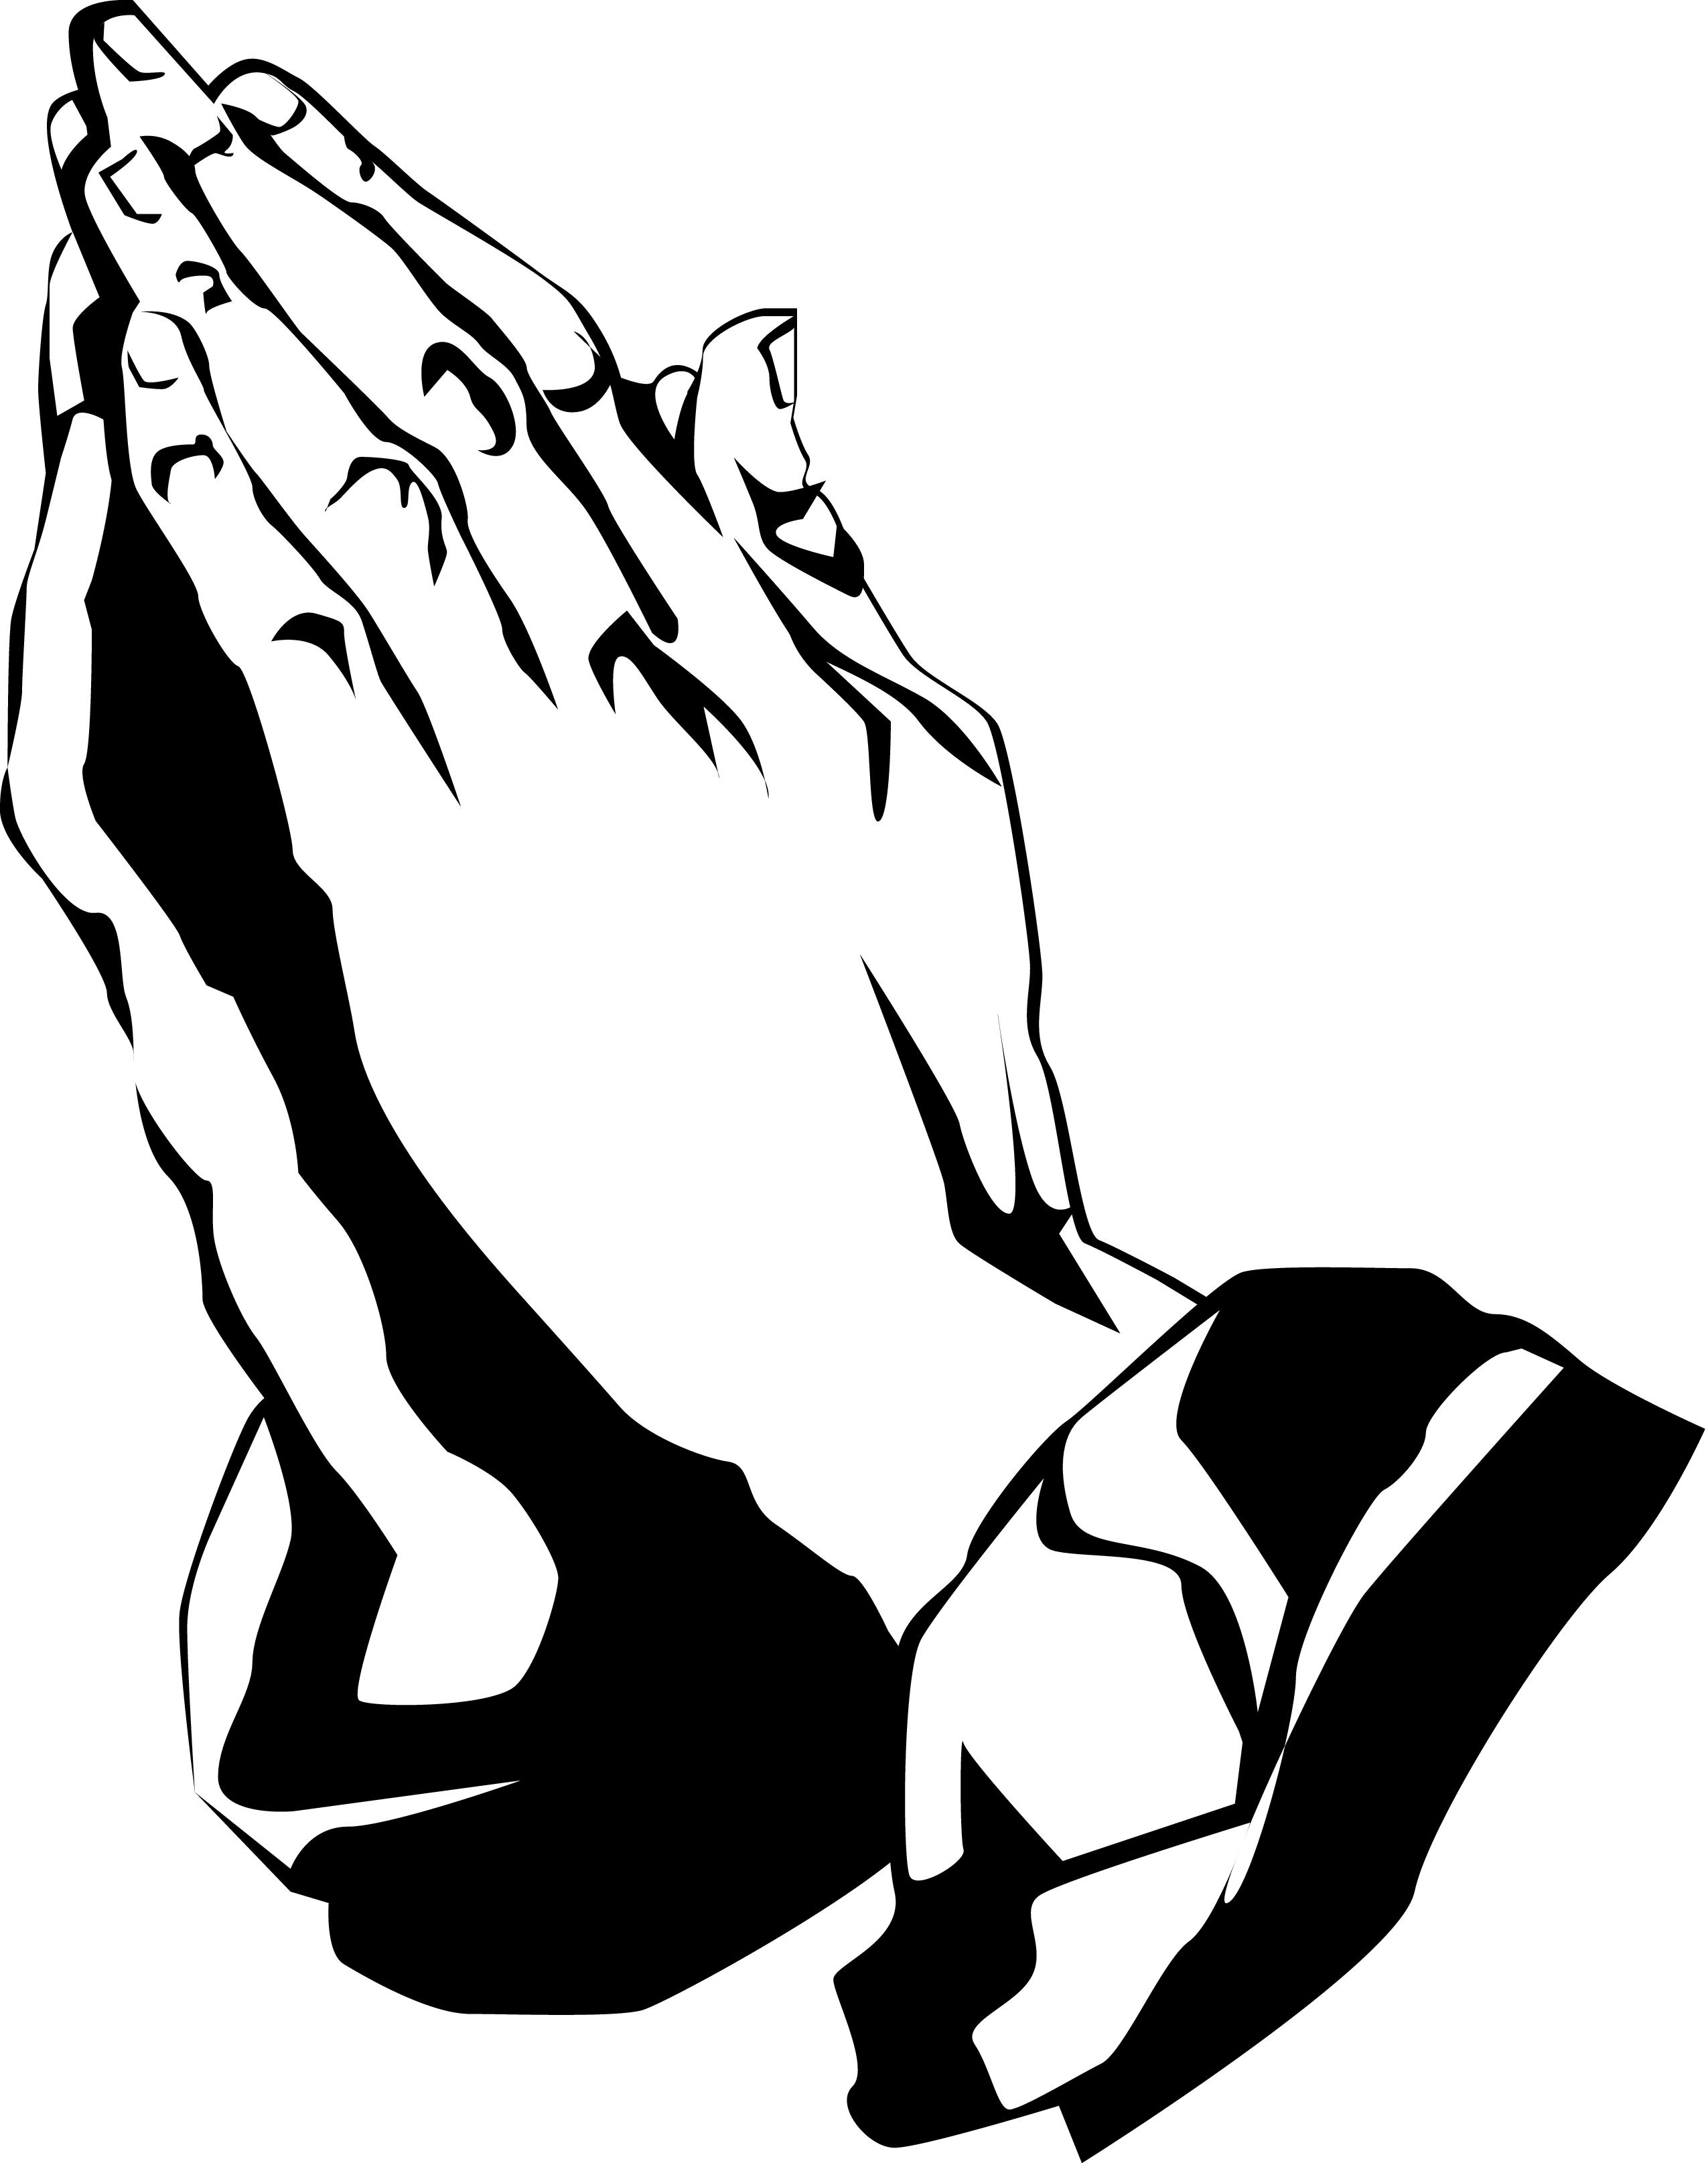 Church praying hands.